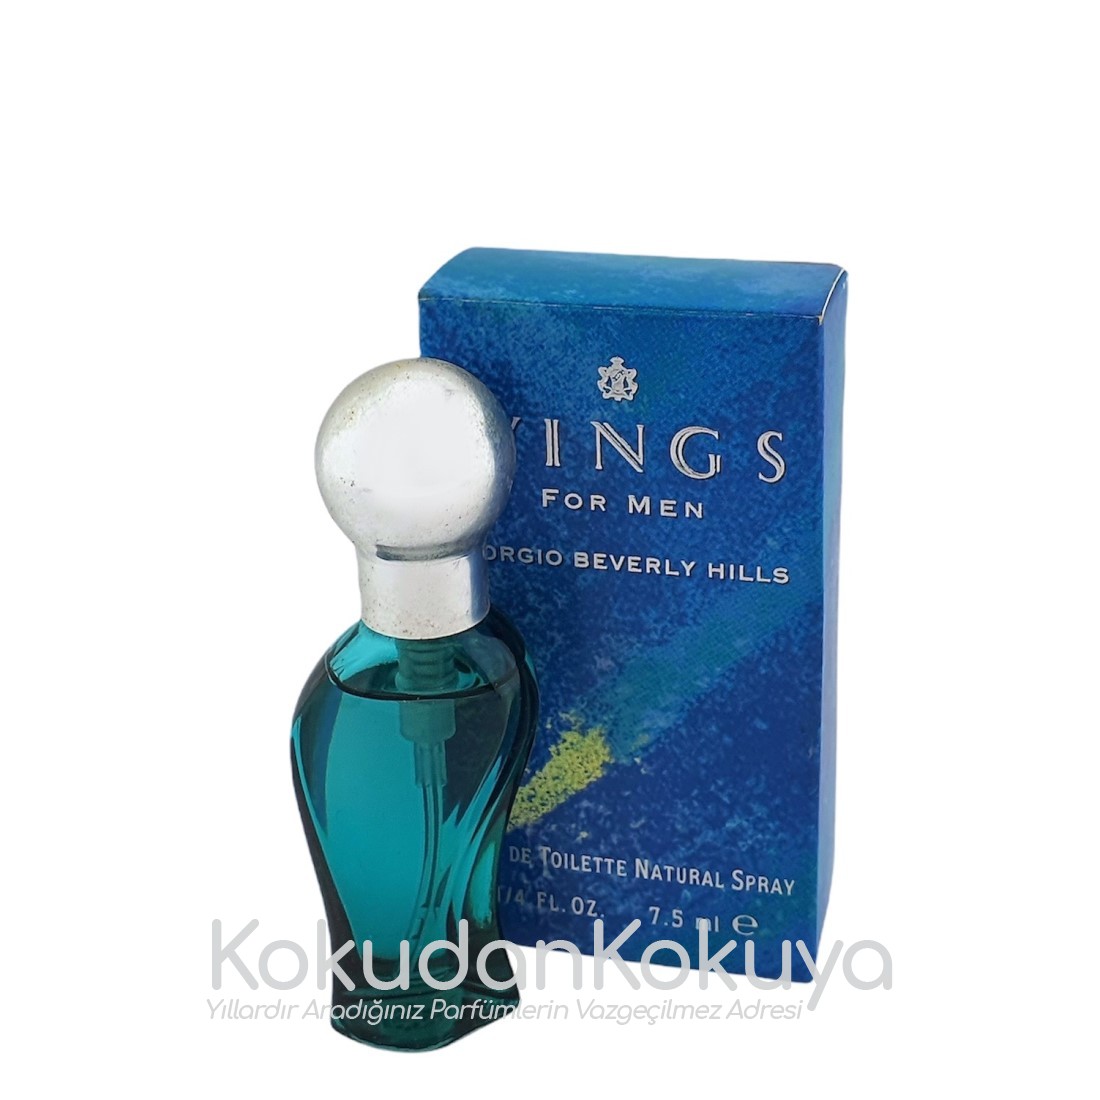 GIORGIO BEVERLY HILLS Wings for Men (Vintage) Parfüm Erkek 7.5ml Minyatür (Mini Perfume) Sprey 